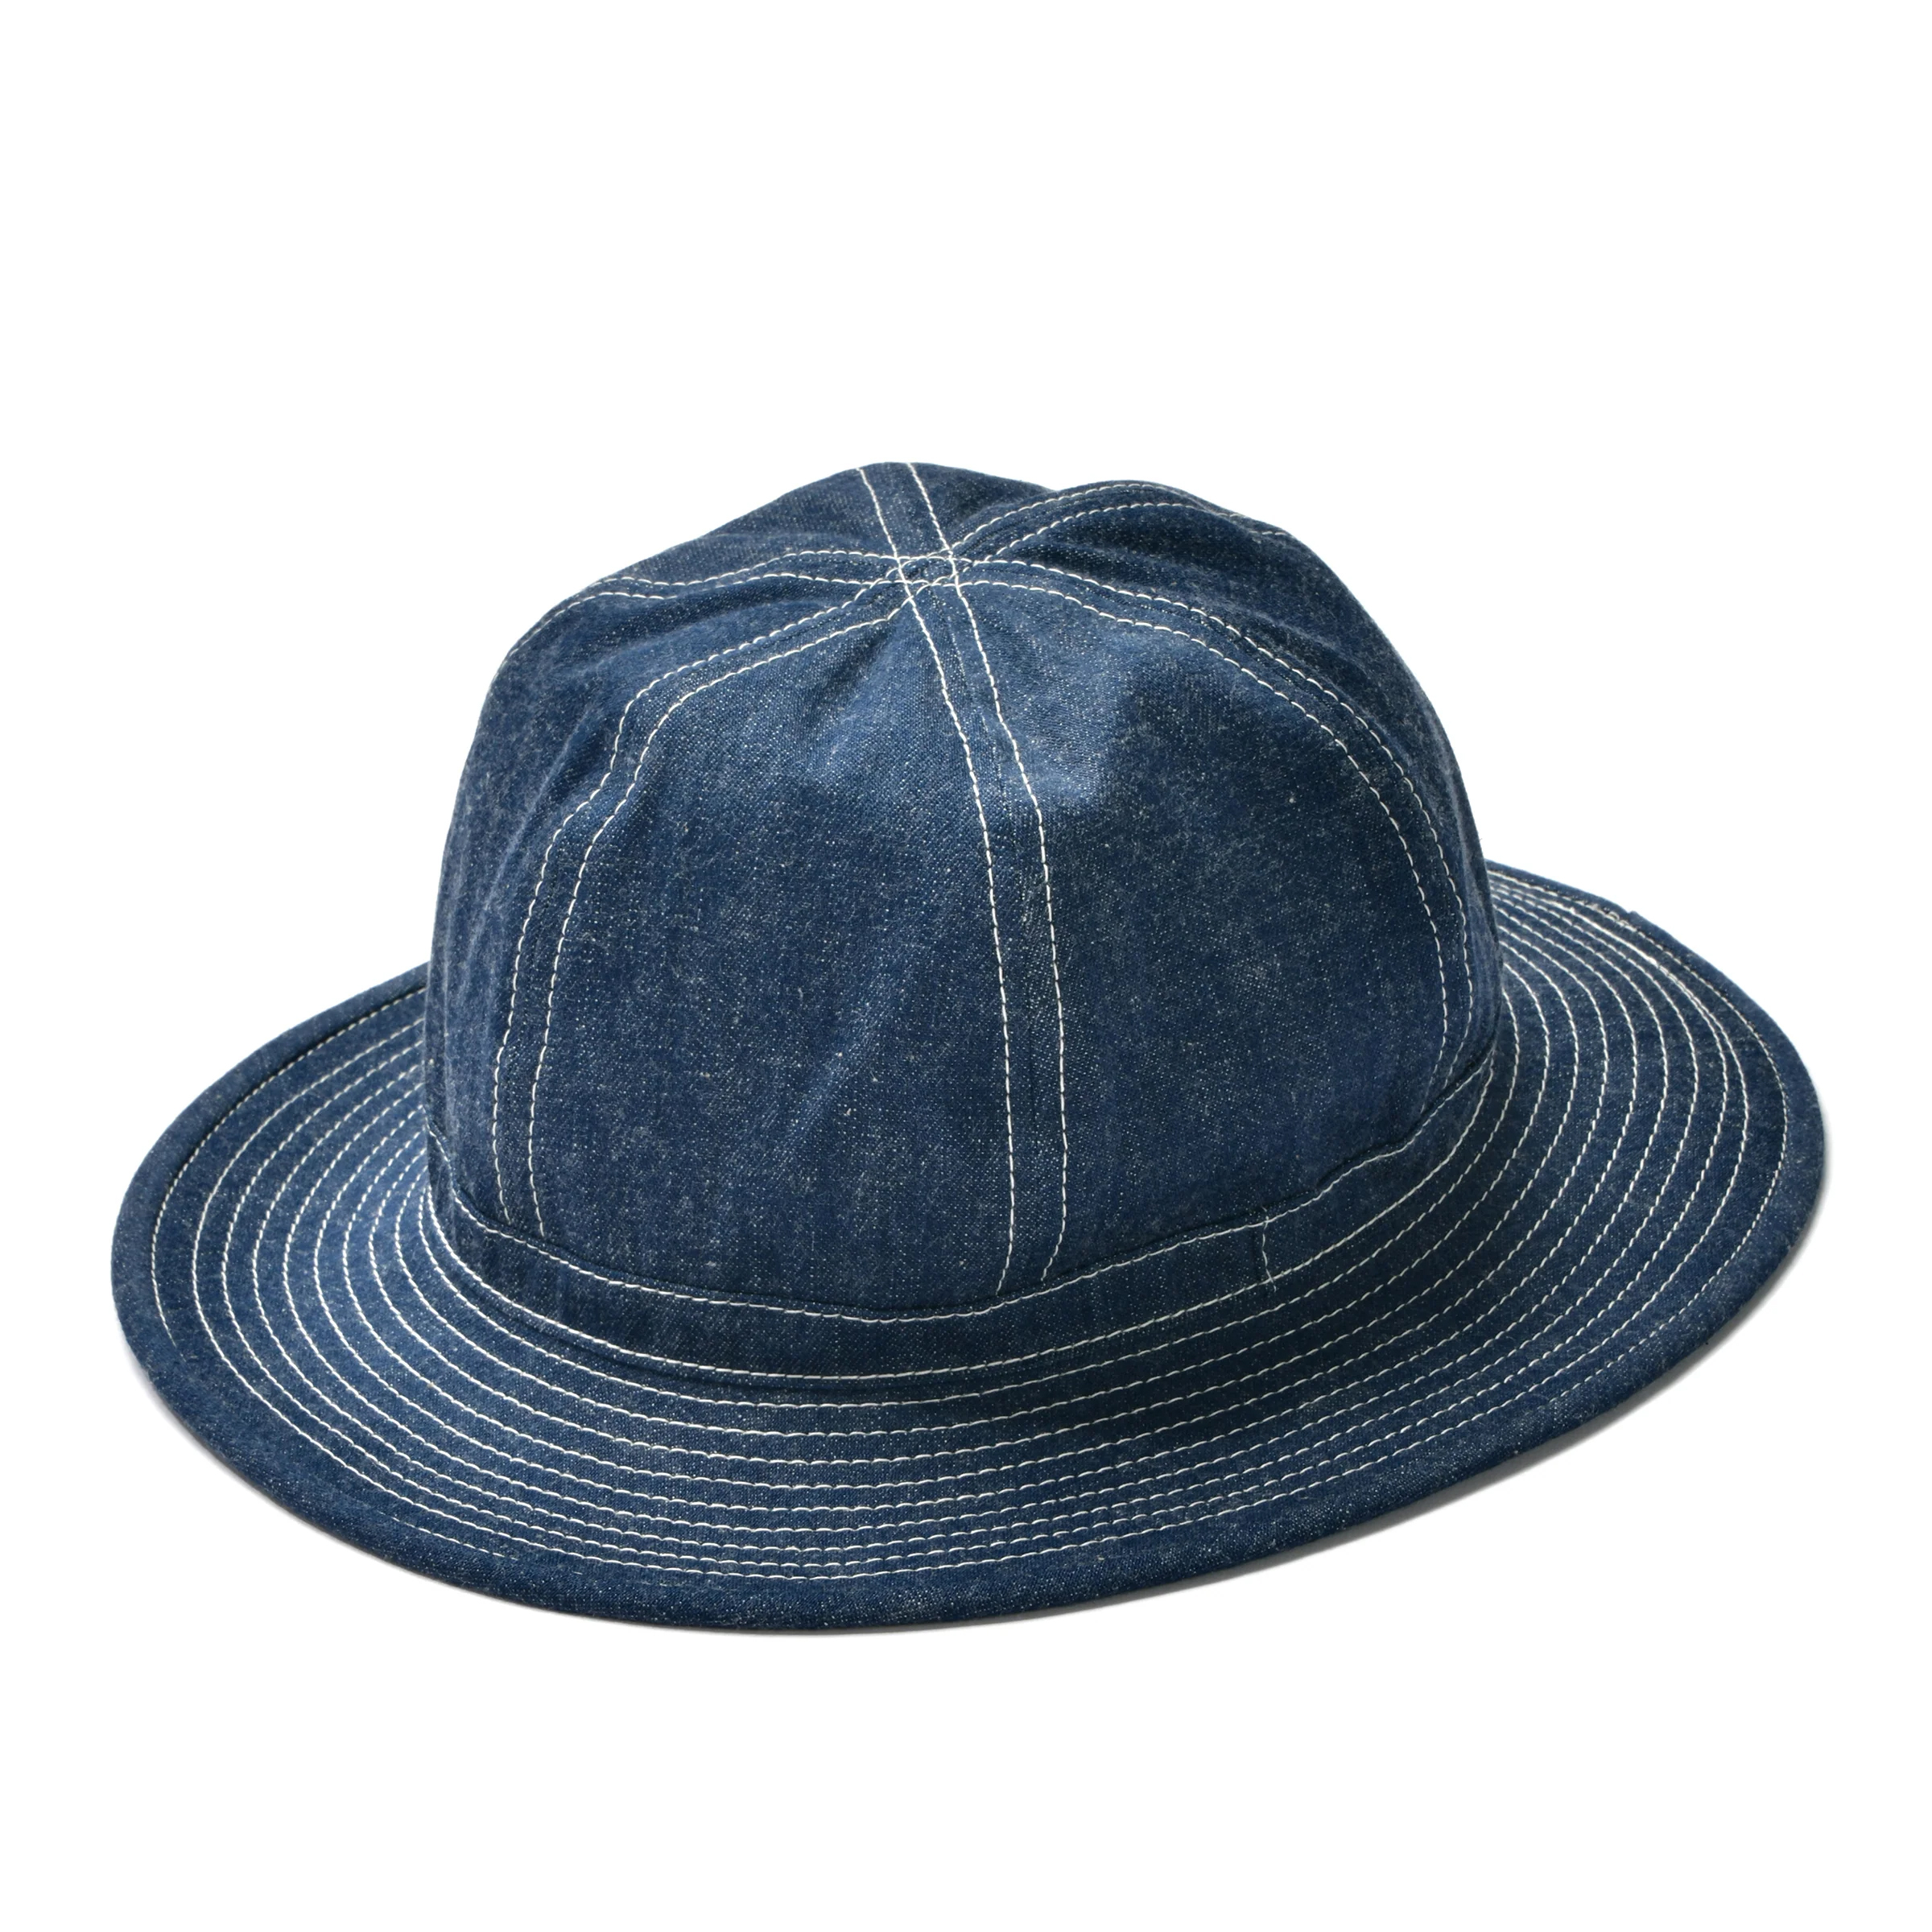 The Real McCoy's - Hat, Working, Denim, Blue (Indigo)